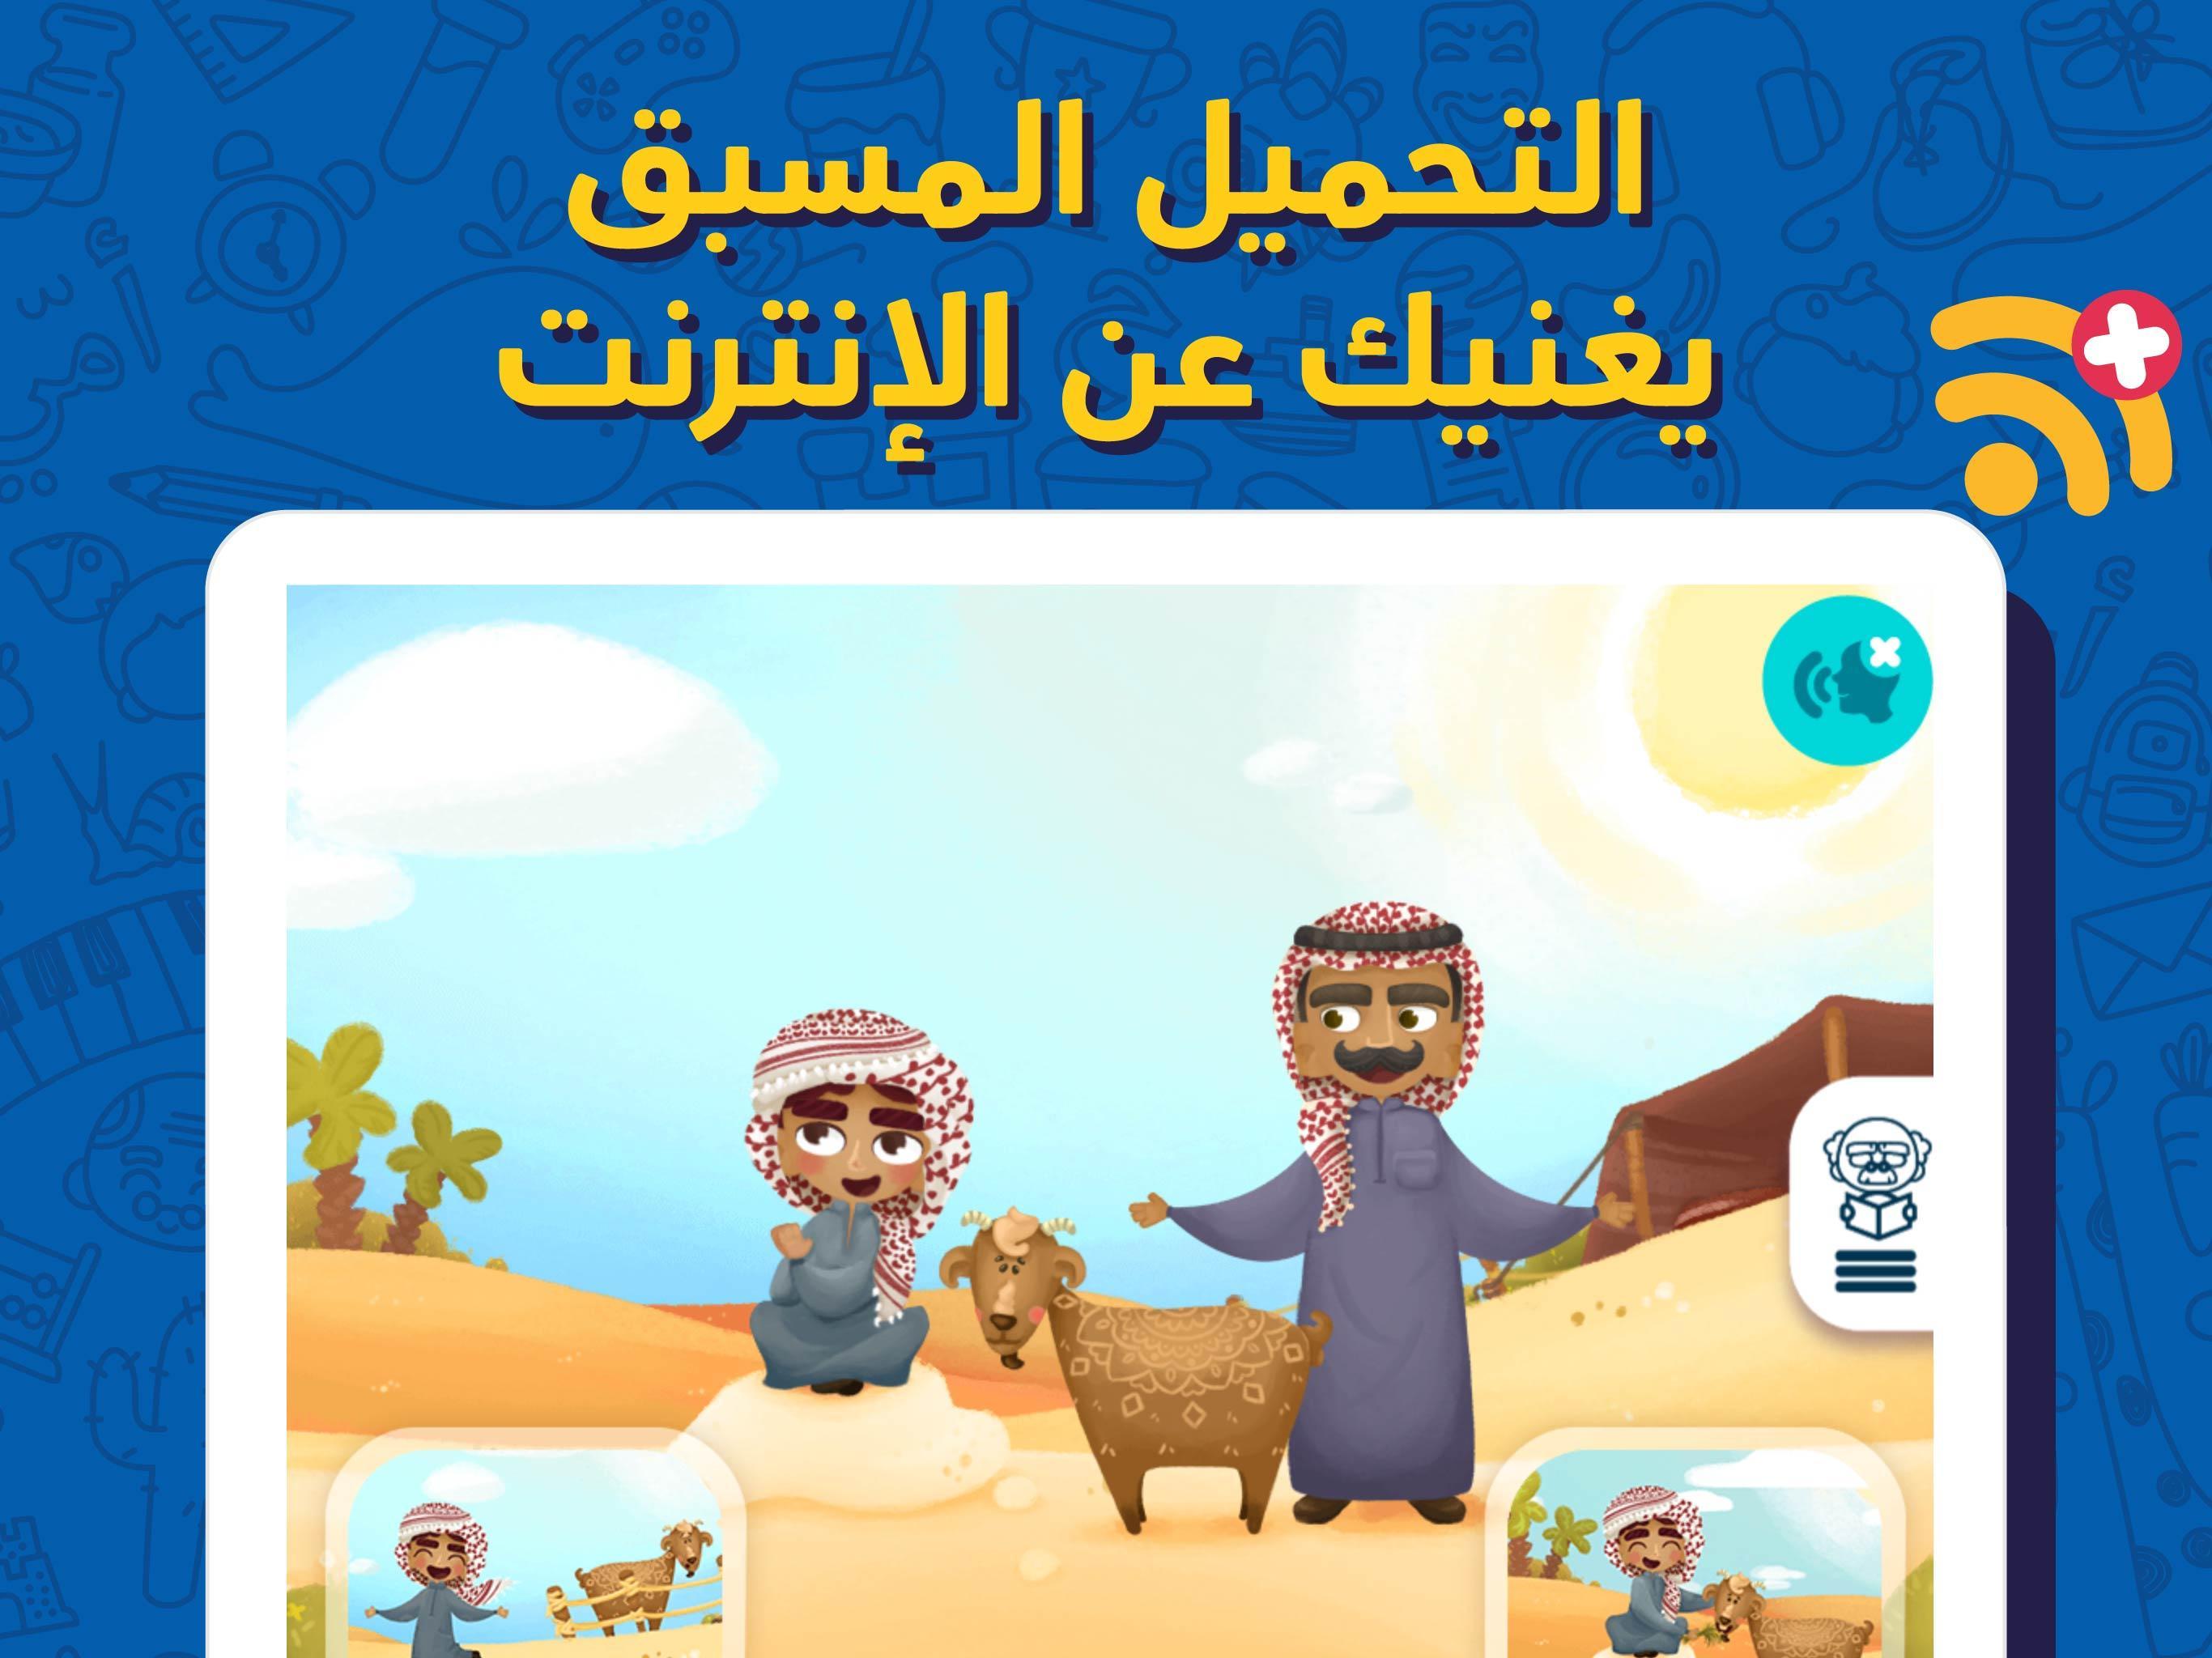 Lamsa Stories, Games, and Activities for Children 4.18.0 Screenshot 21